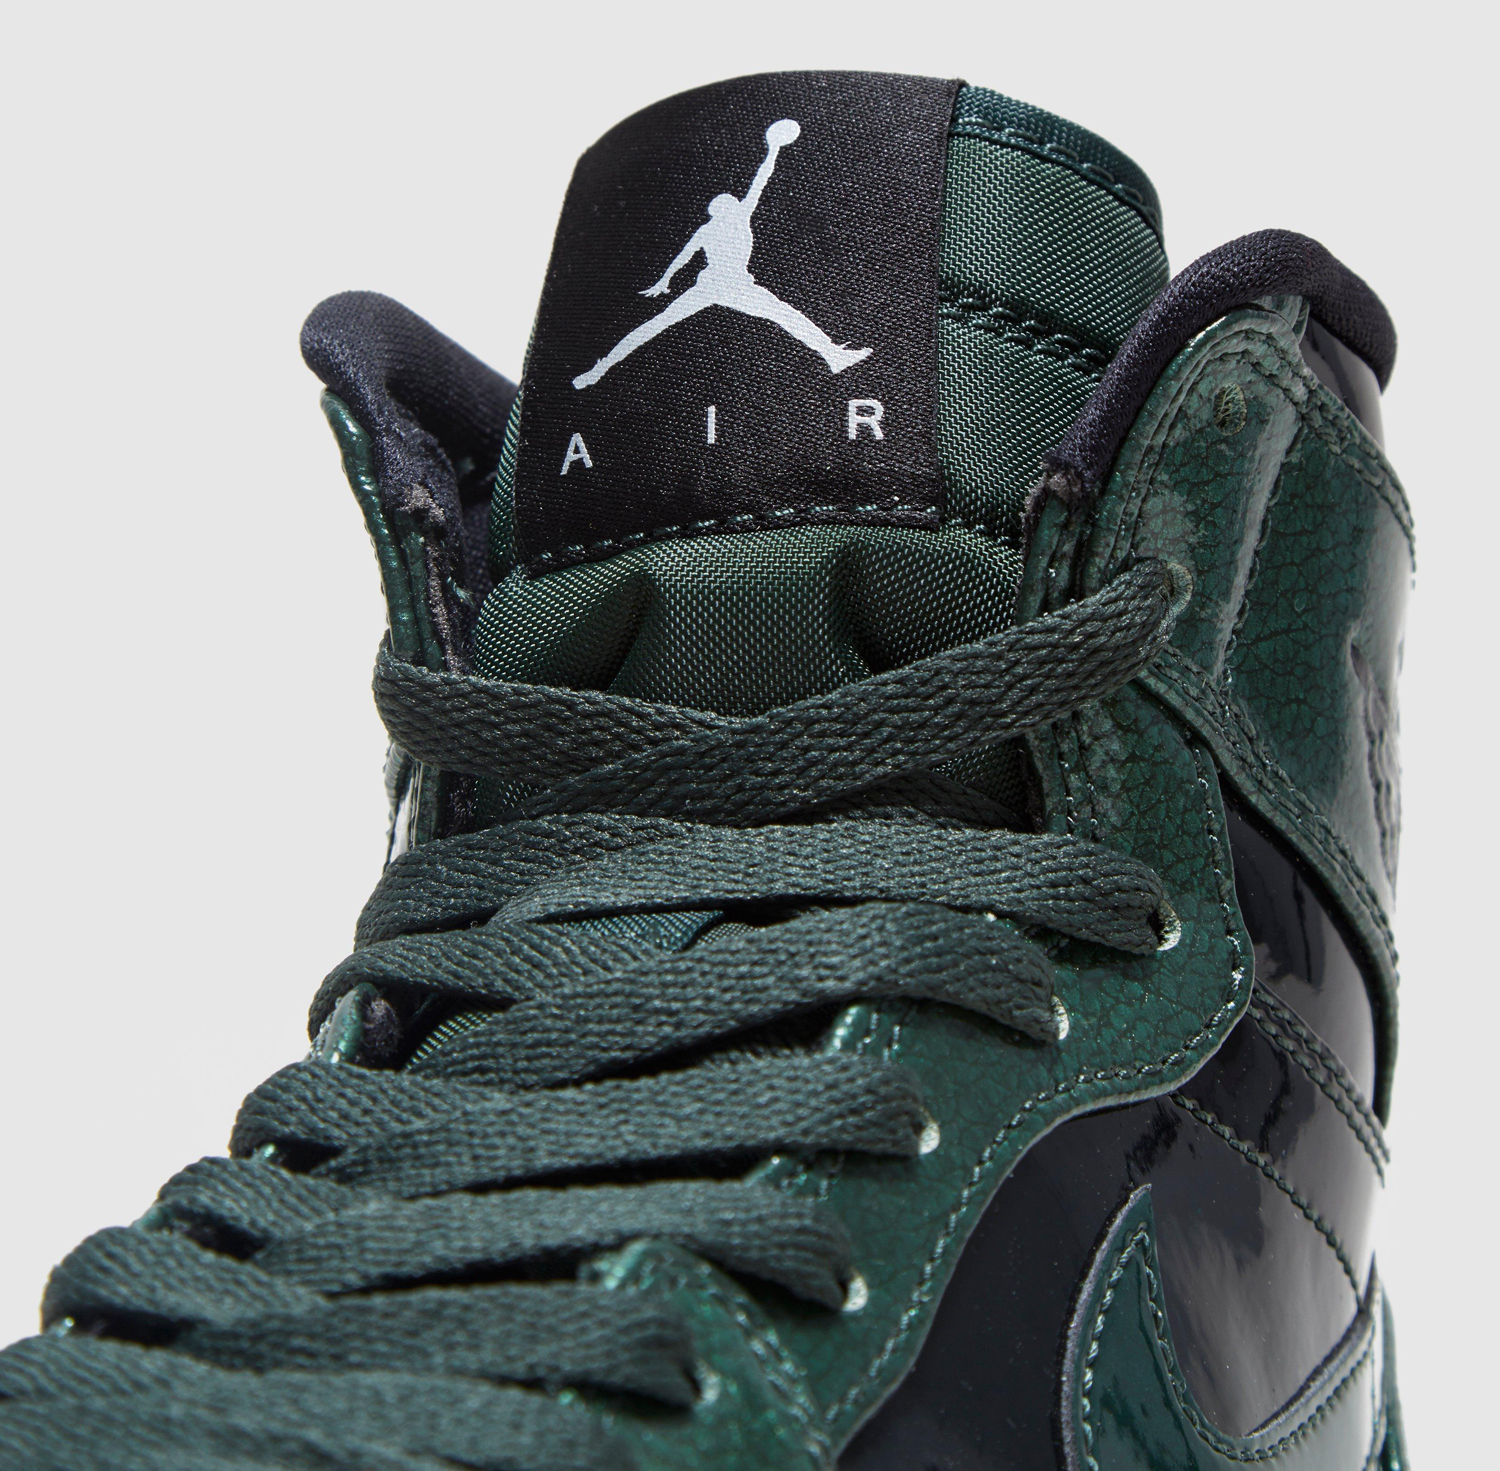 Air Jordan 1 Gorge Green Patent Leather 332550-300 Tongue